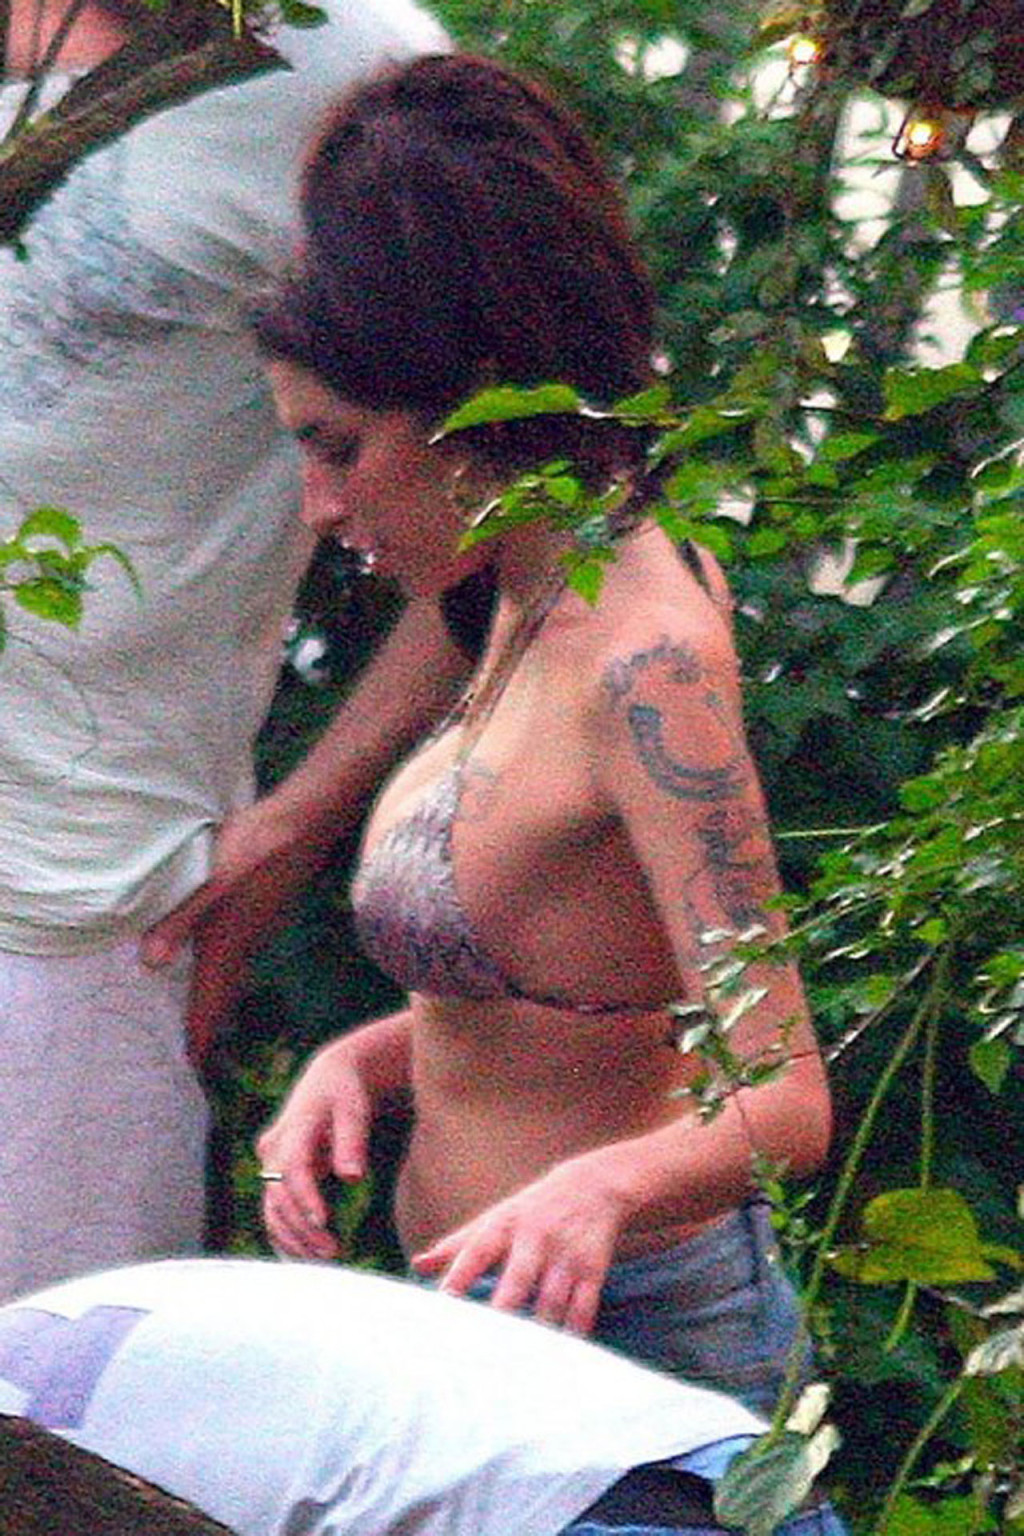 Amy winehouse exposant son corps sexy en bikini et ses énormes tétons
 #75321358